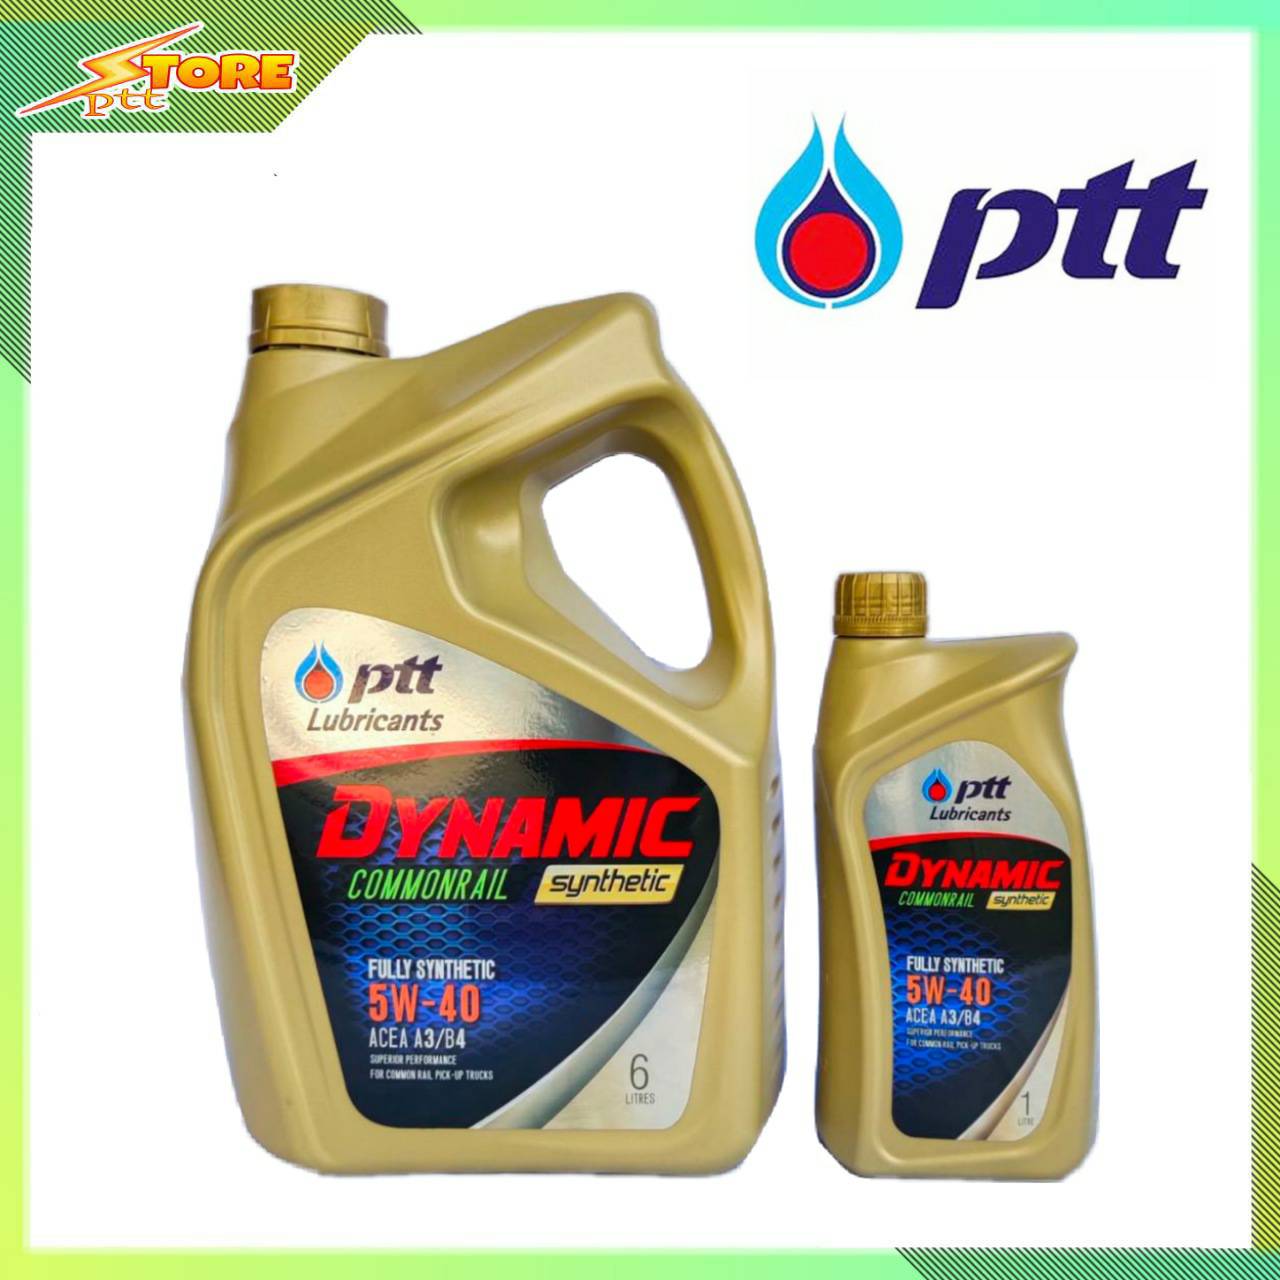 PTT (ปตท) FULLY SYNTHETIC 5W-40 7ลิตร DYNAMIC Commonrail Synthetic น้ำมันเครื่องยนต์ ดีเซล สังเคราะห์แท้ 100%